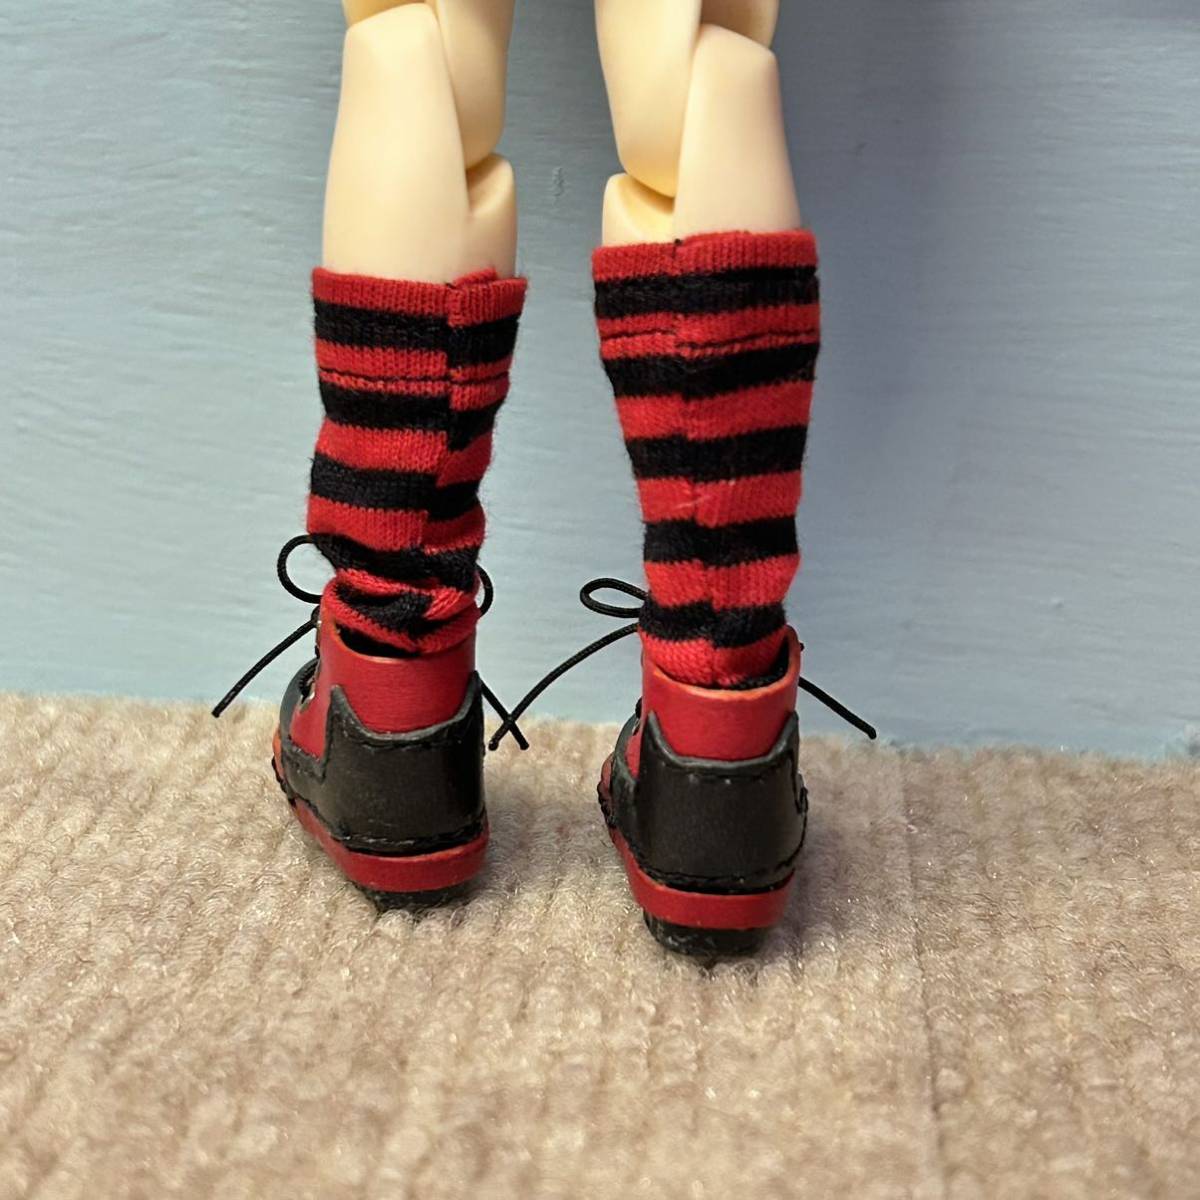 Blythe outfit of 靴 猫 レザー シューズ ネオブライス 赤×黒 革 ブライス 1/6サイズ doll_画像8